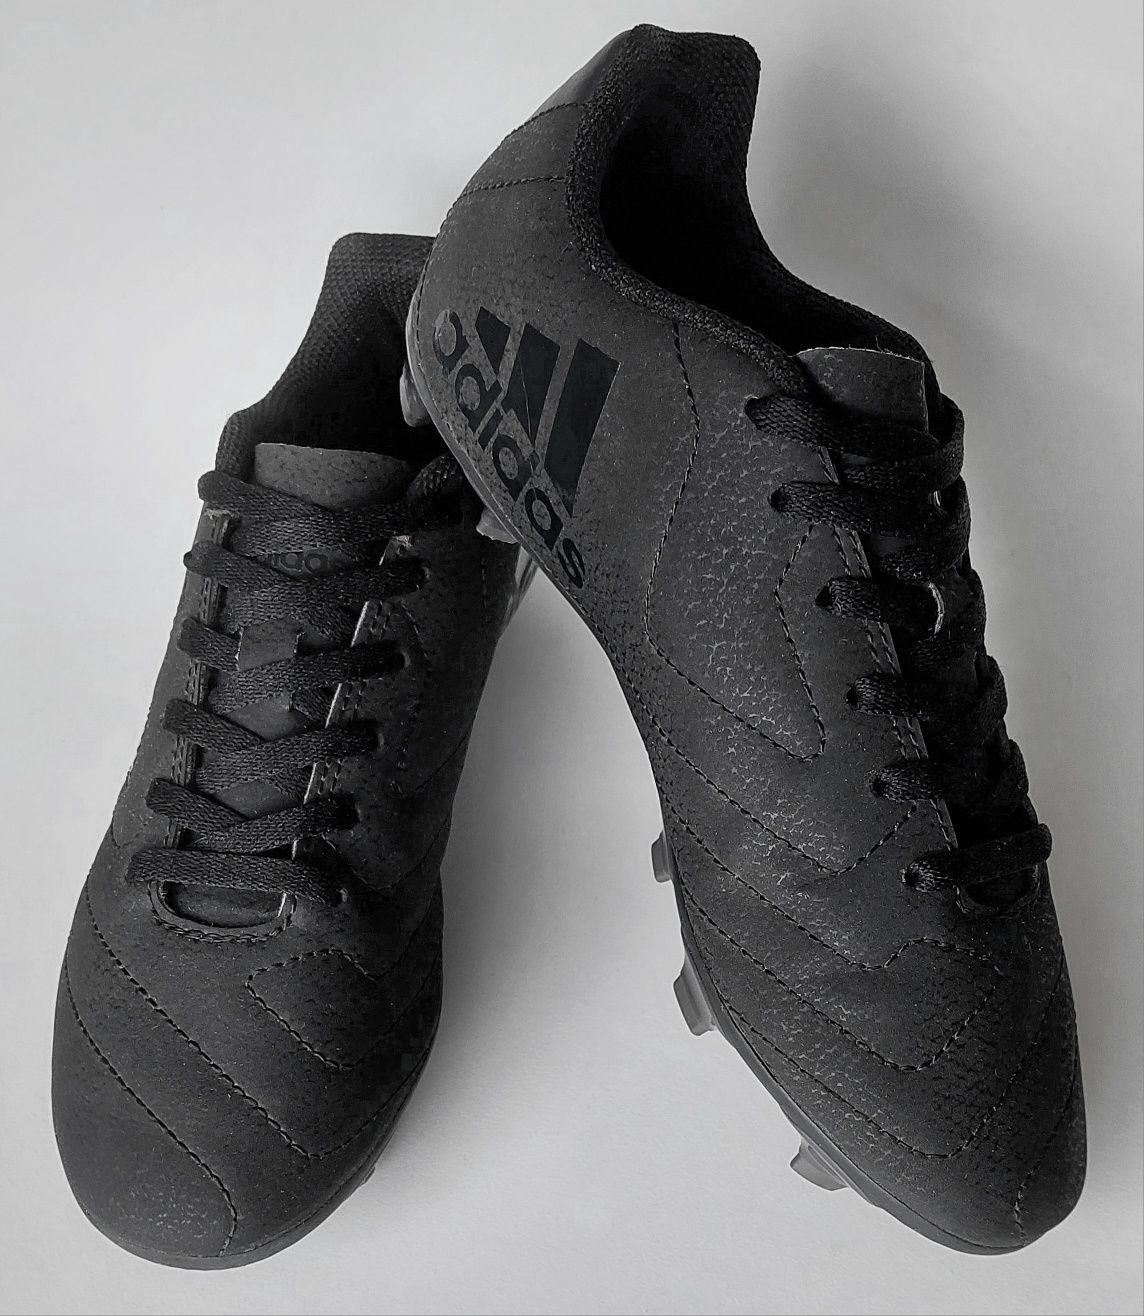 Buty piłkarskie Adidas Goletto VII FG roz.35,5 korki lanki